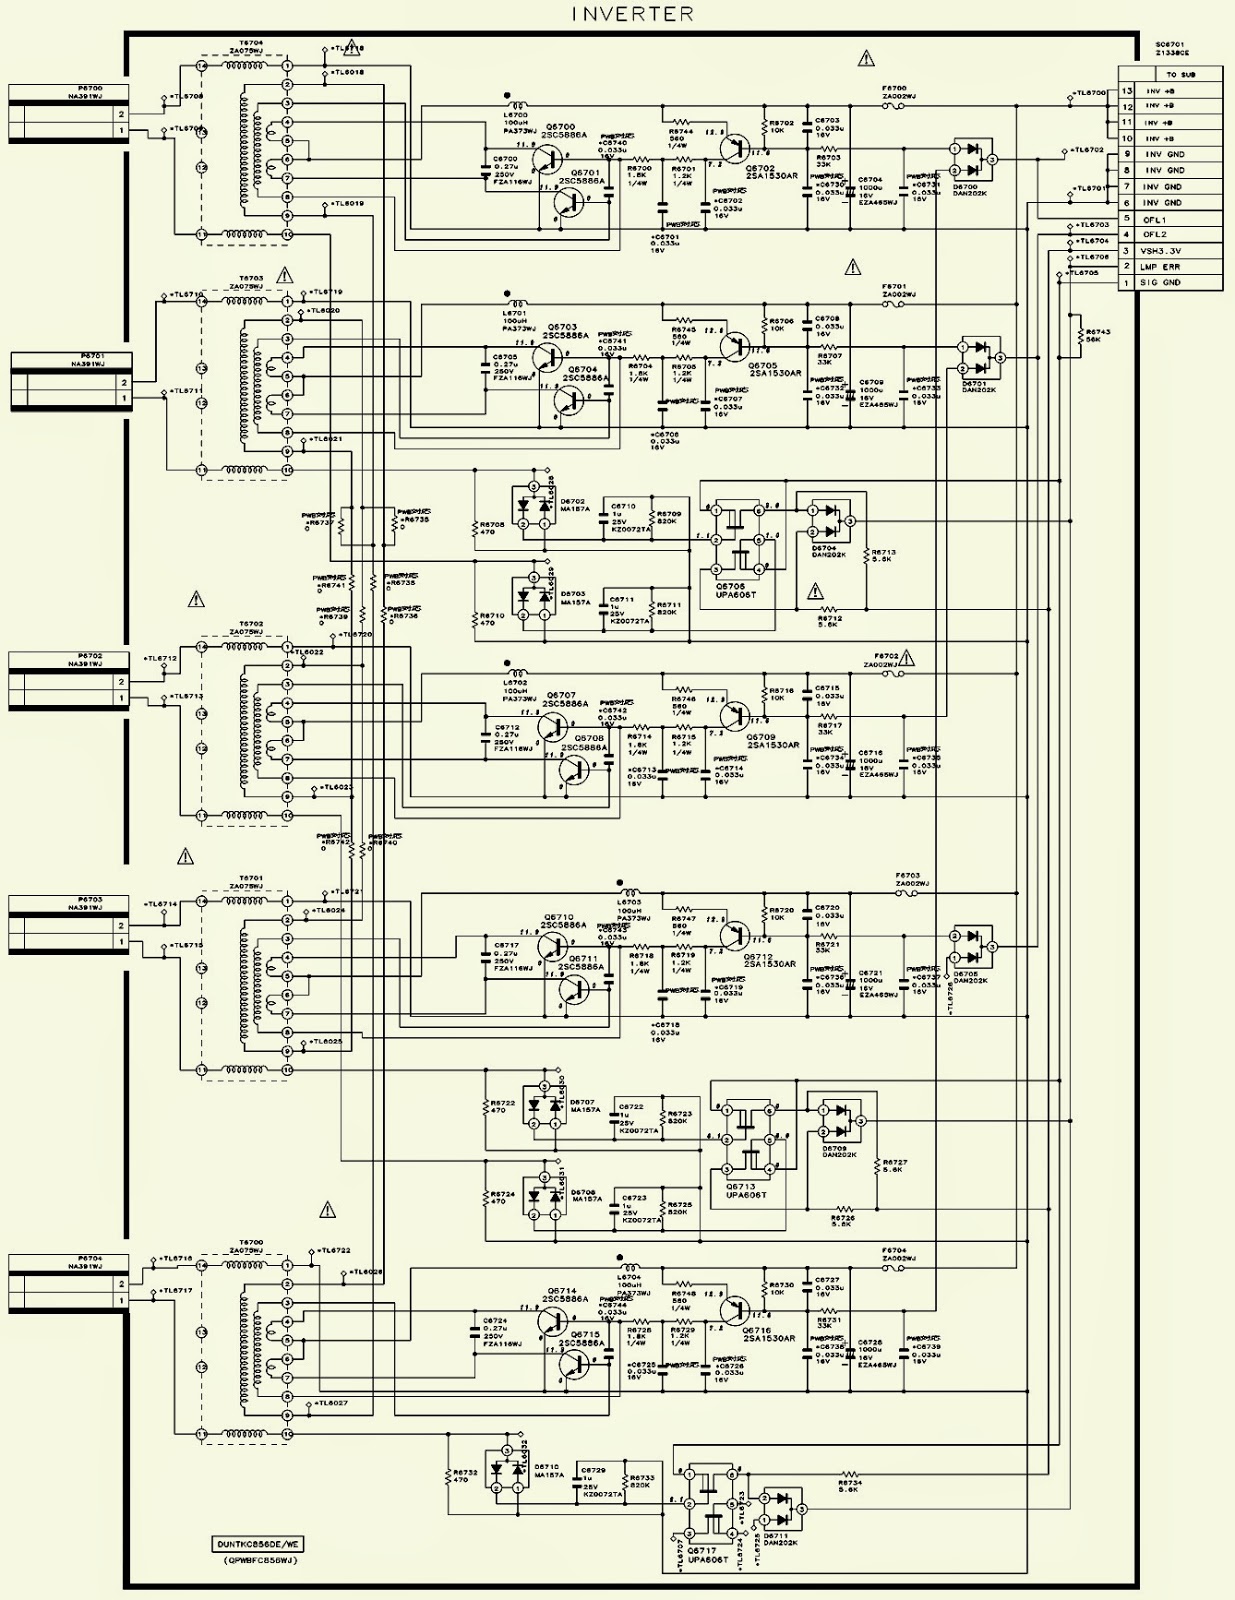 Electro help: LC20SH1-E - SHARP - SCHEMATIC DIAGRAM [Circuit Diagram